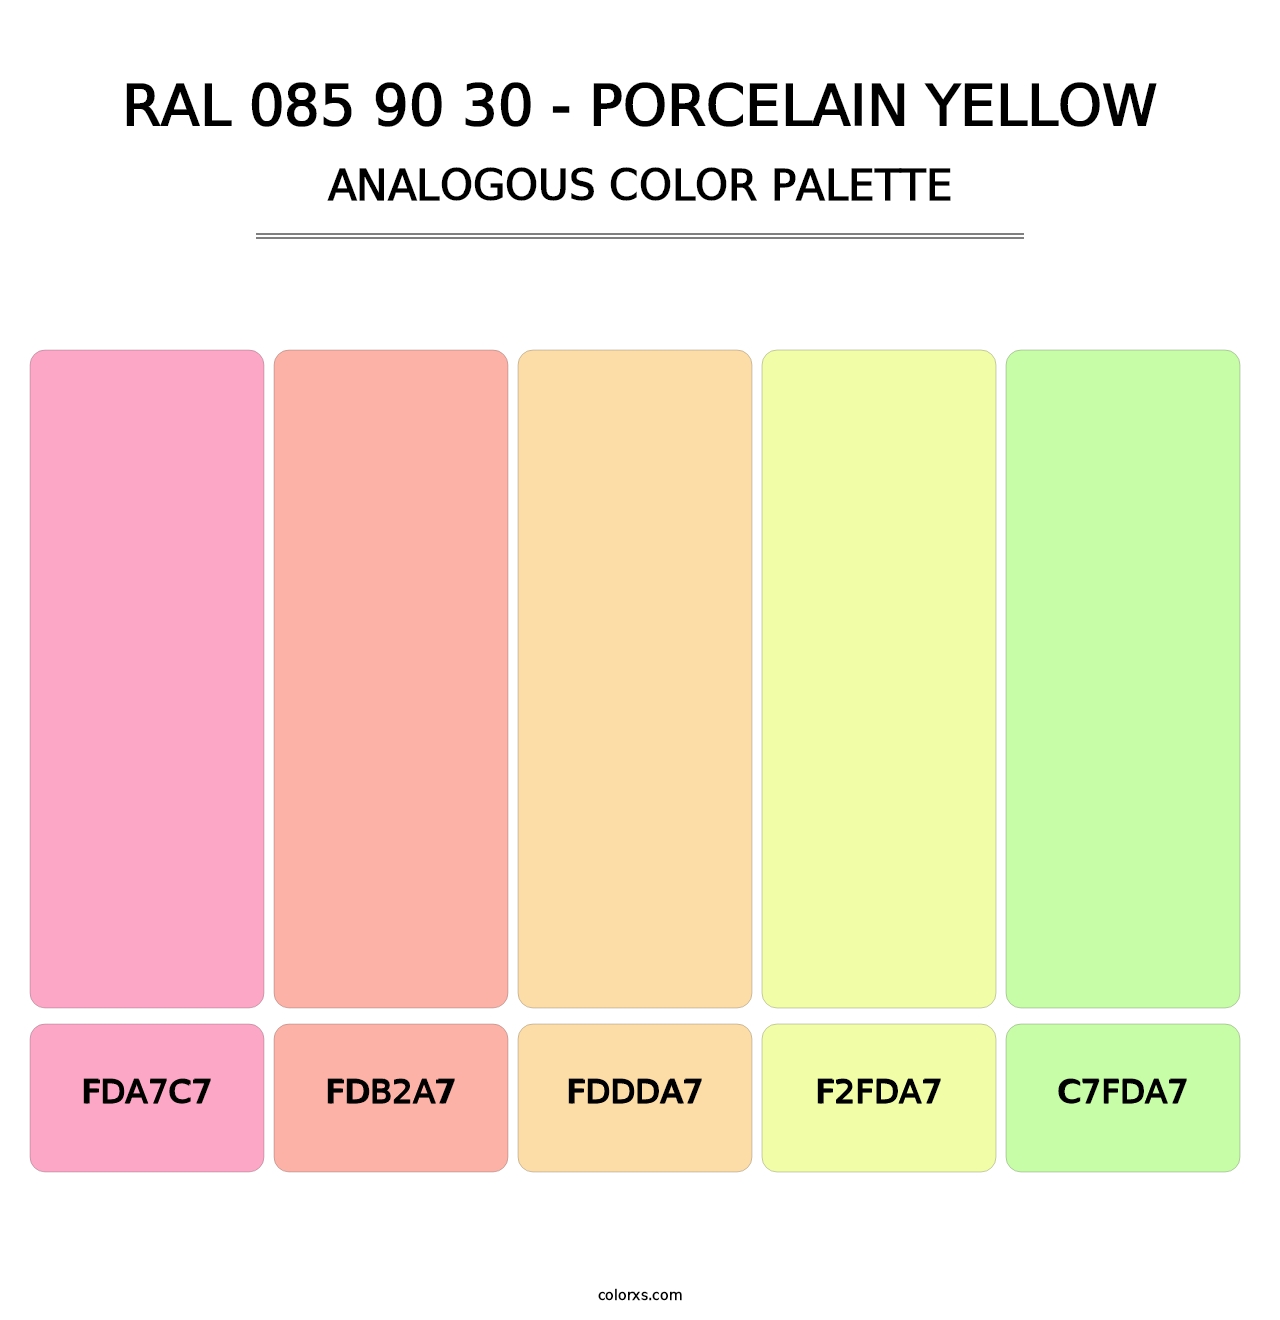 RAL 085 90 30 - Porcelain Yellow - Analogous Color Palette